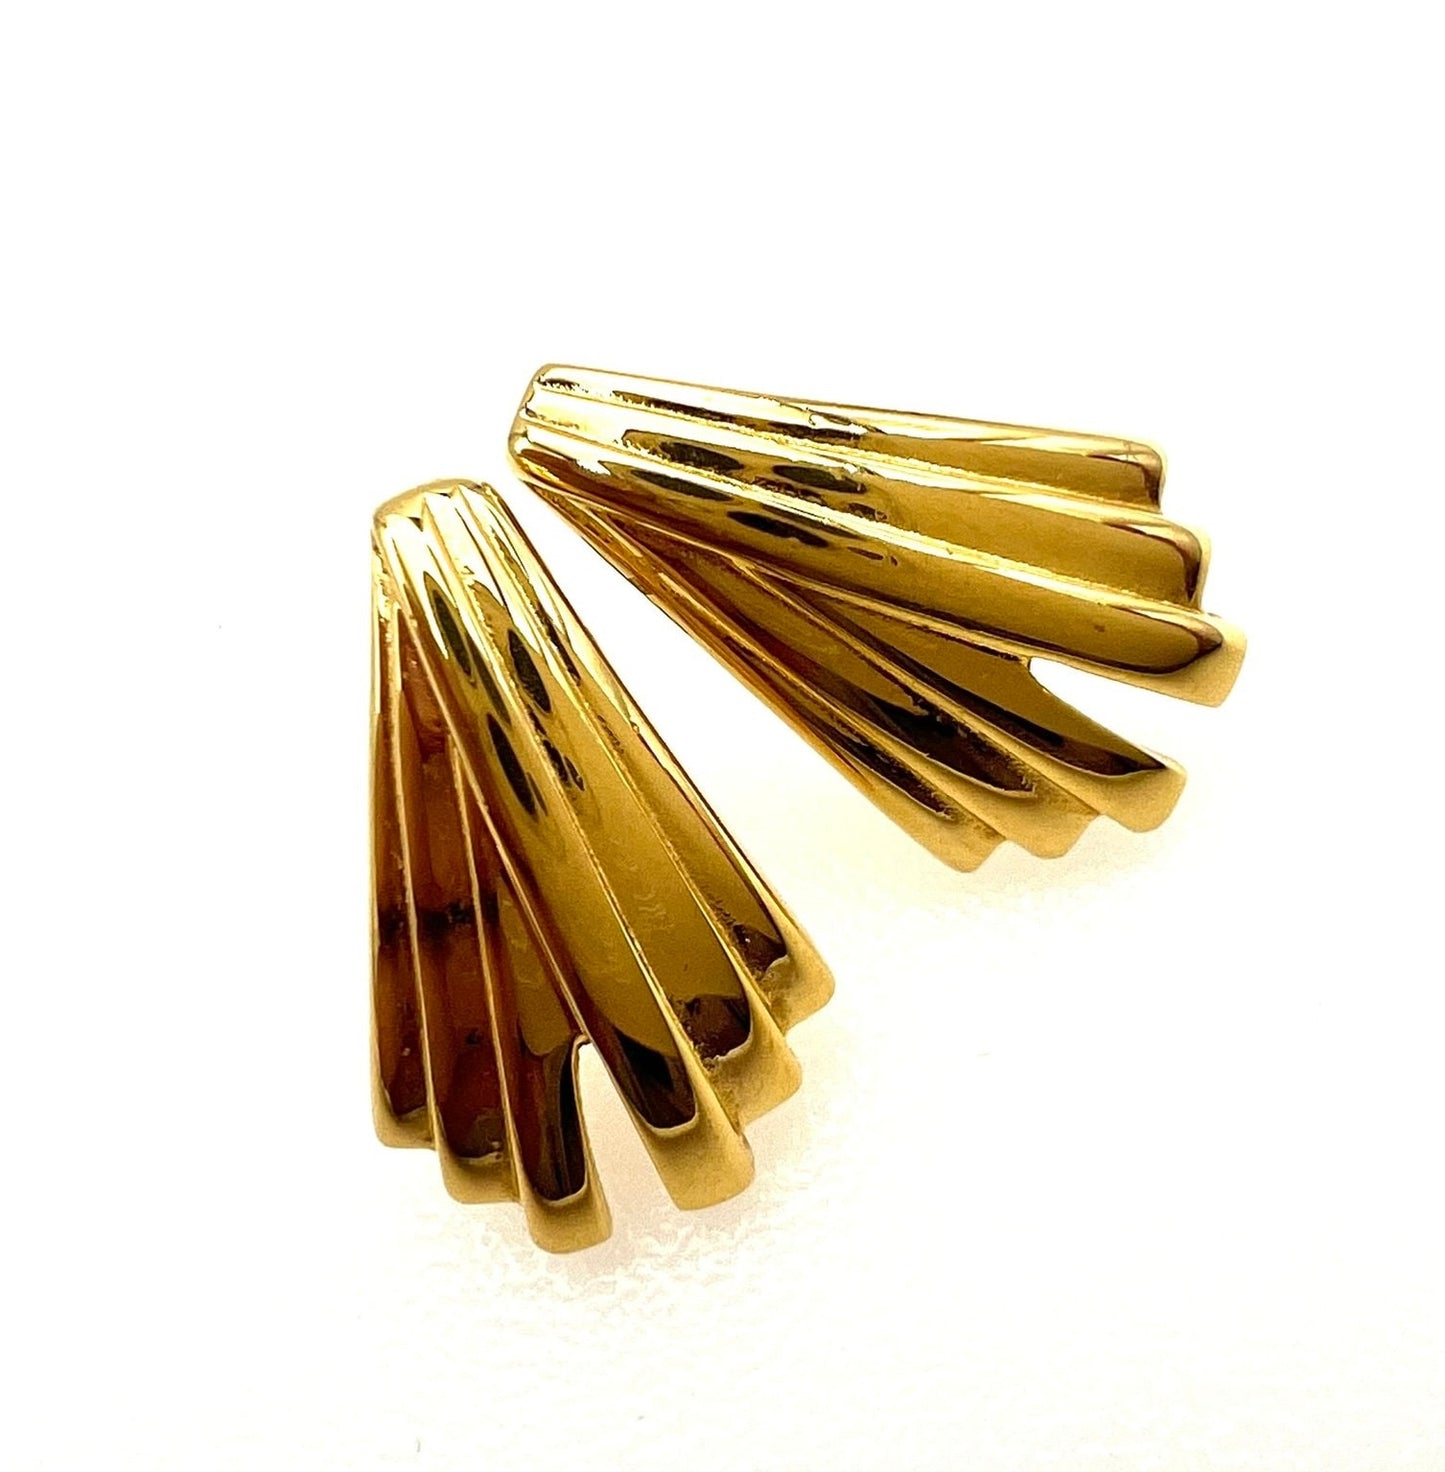 Monet Gold Plated Modernist Ridged Fan Pierced Earrings with (Brand New) 14K Gold Filled Butterfly Backs